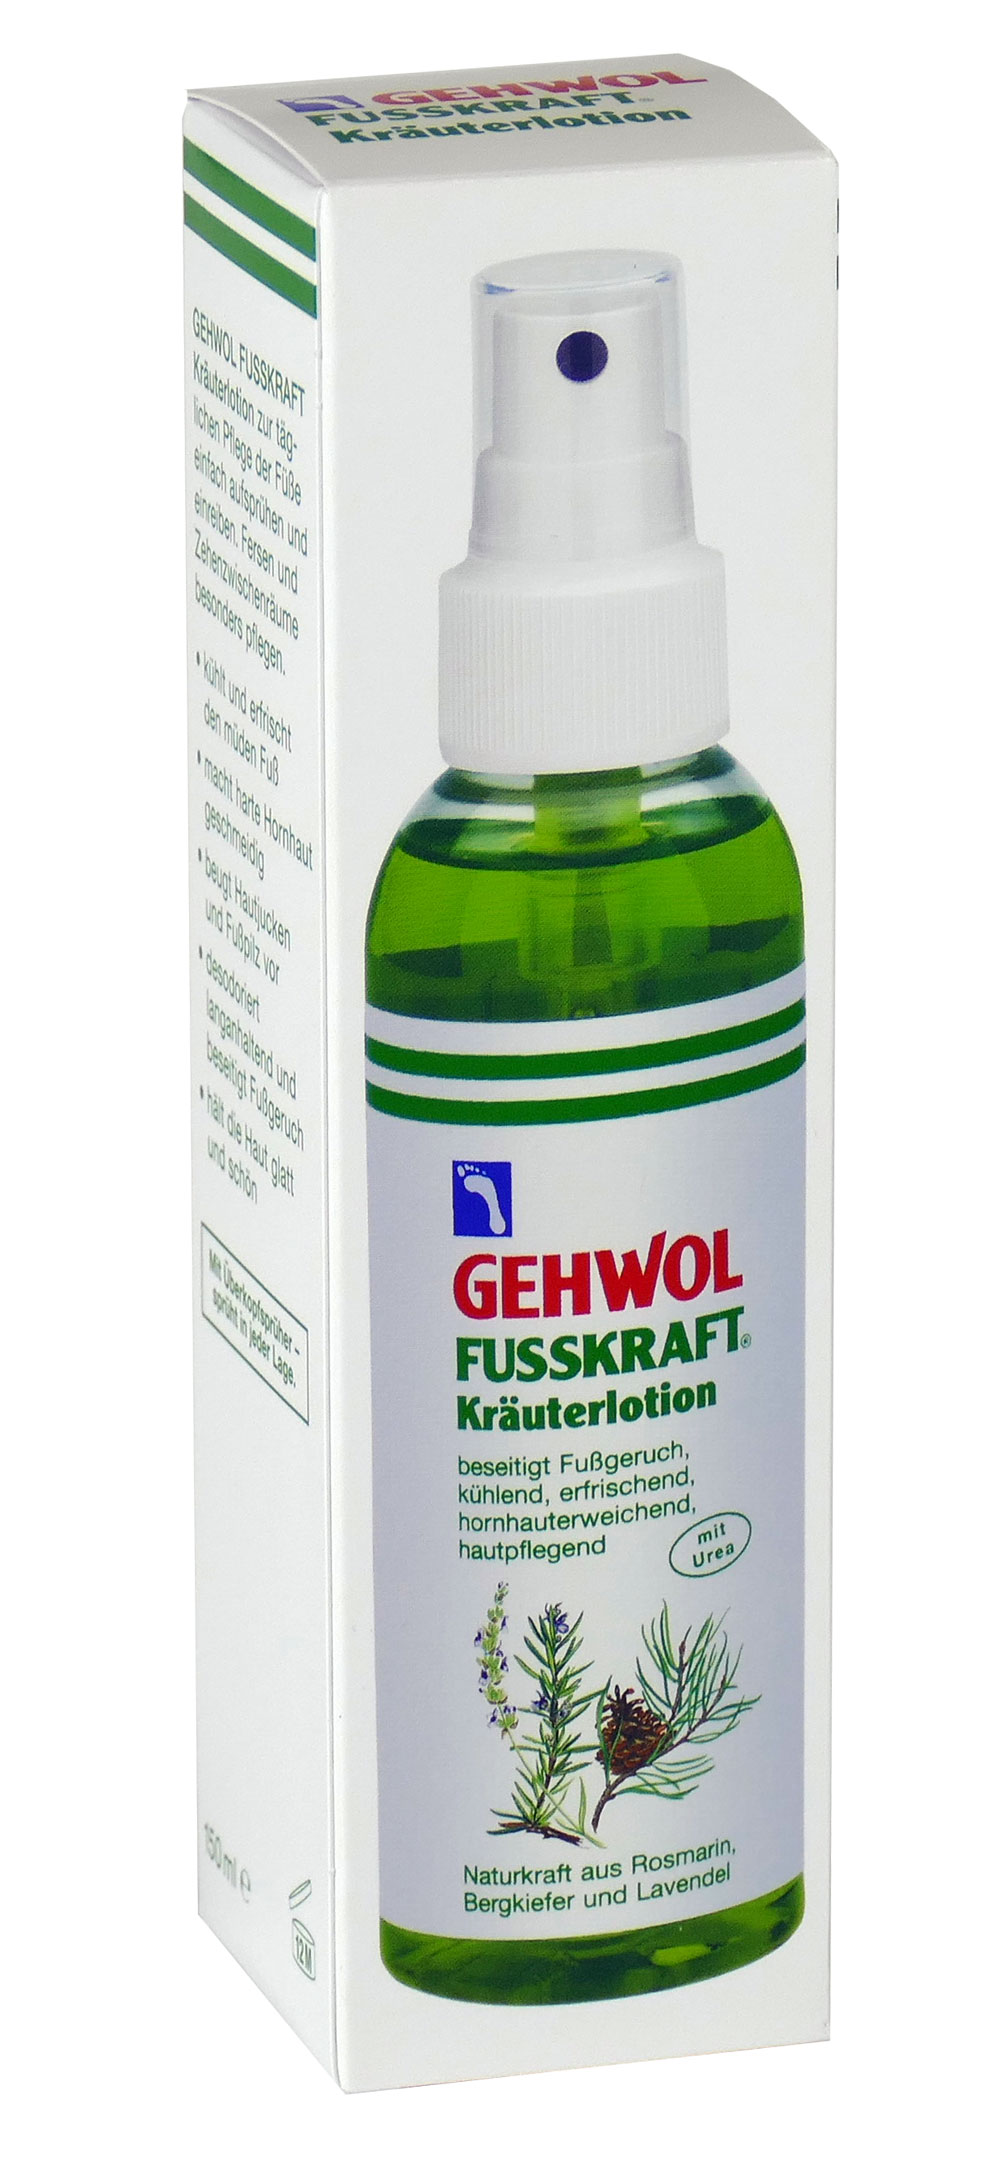 GEHWOL FUSSKRAFT® Kräuterlotion - 150 ml 